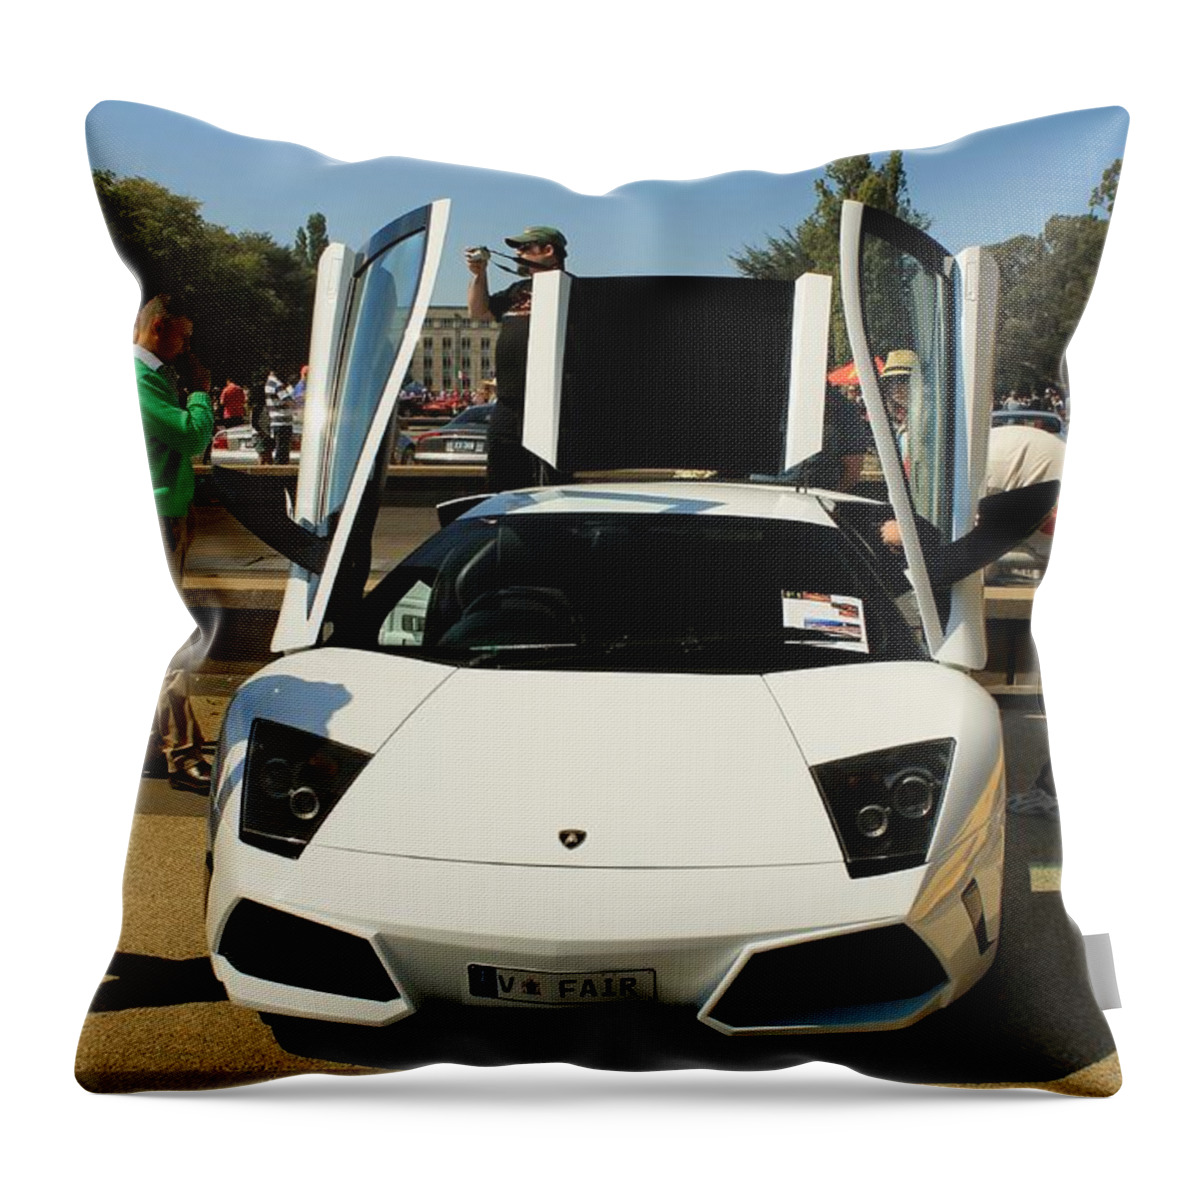 Lamborghini Throw Pillow featuring the photograph Lamborghini Murcielago by Anthony Croke